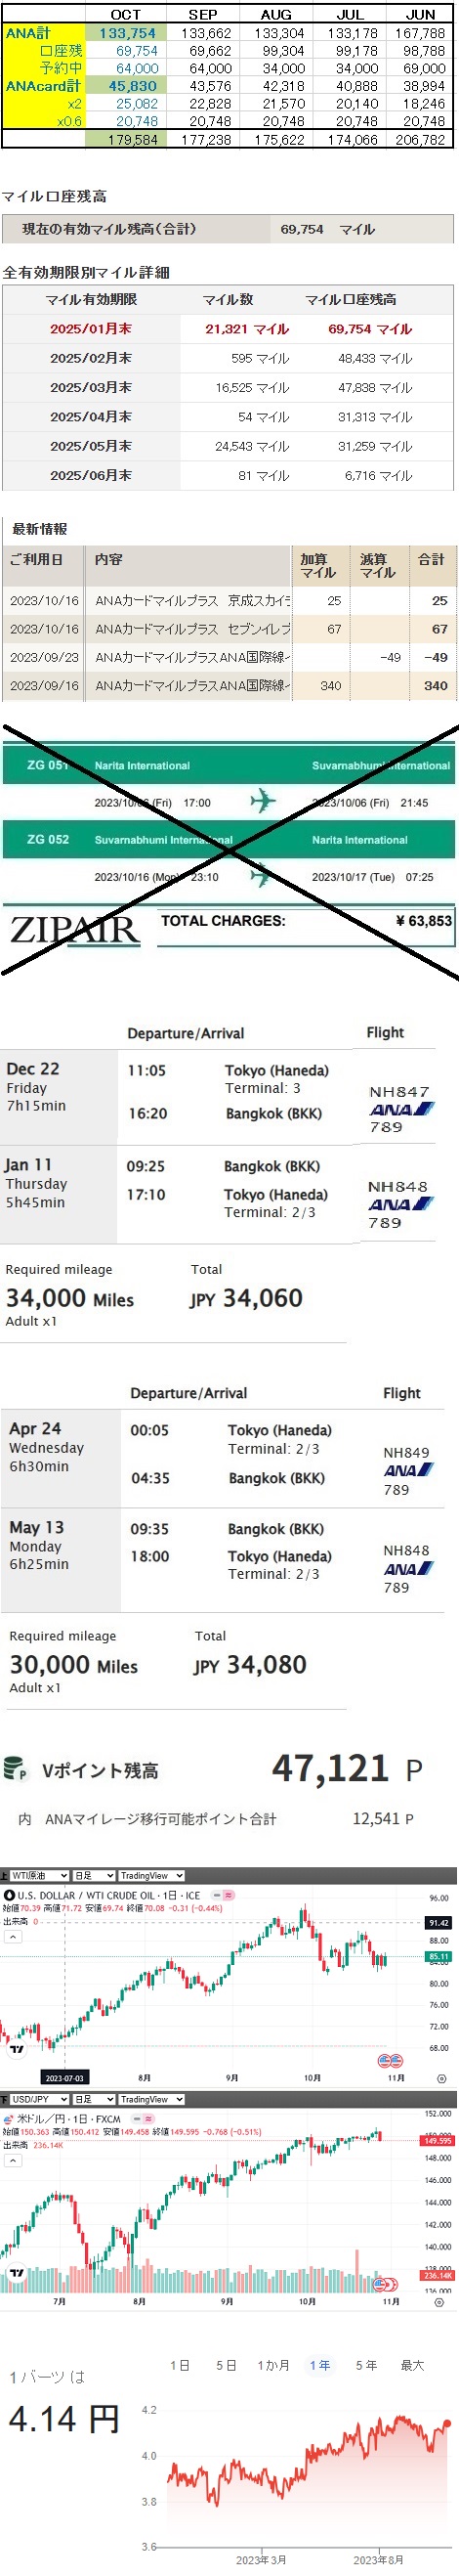 【ANAマイル】 累計獲得976,254M→842,500M搭乗